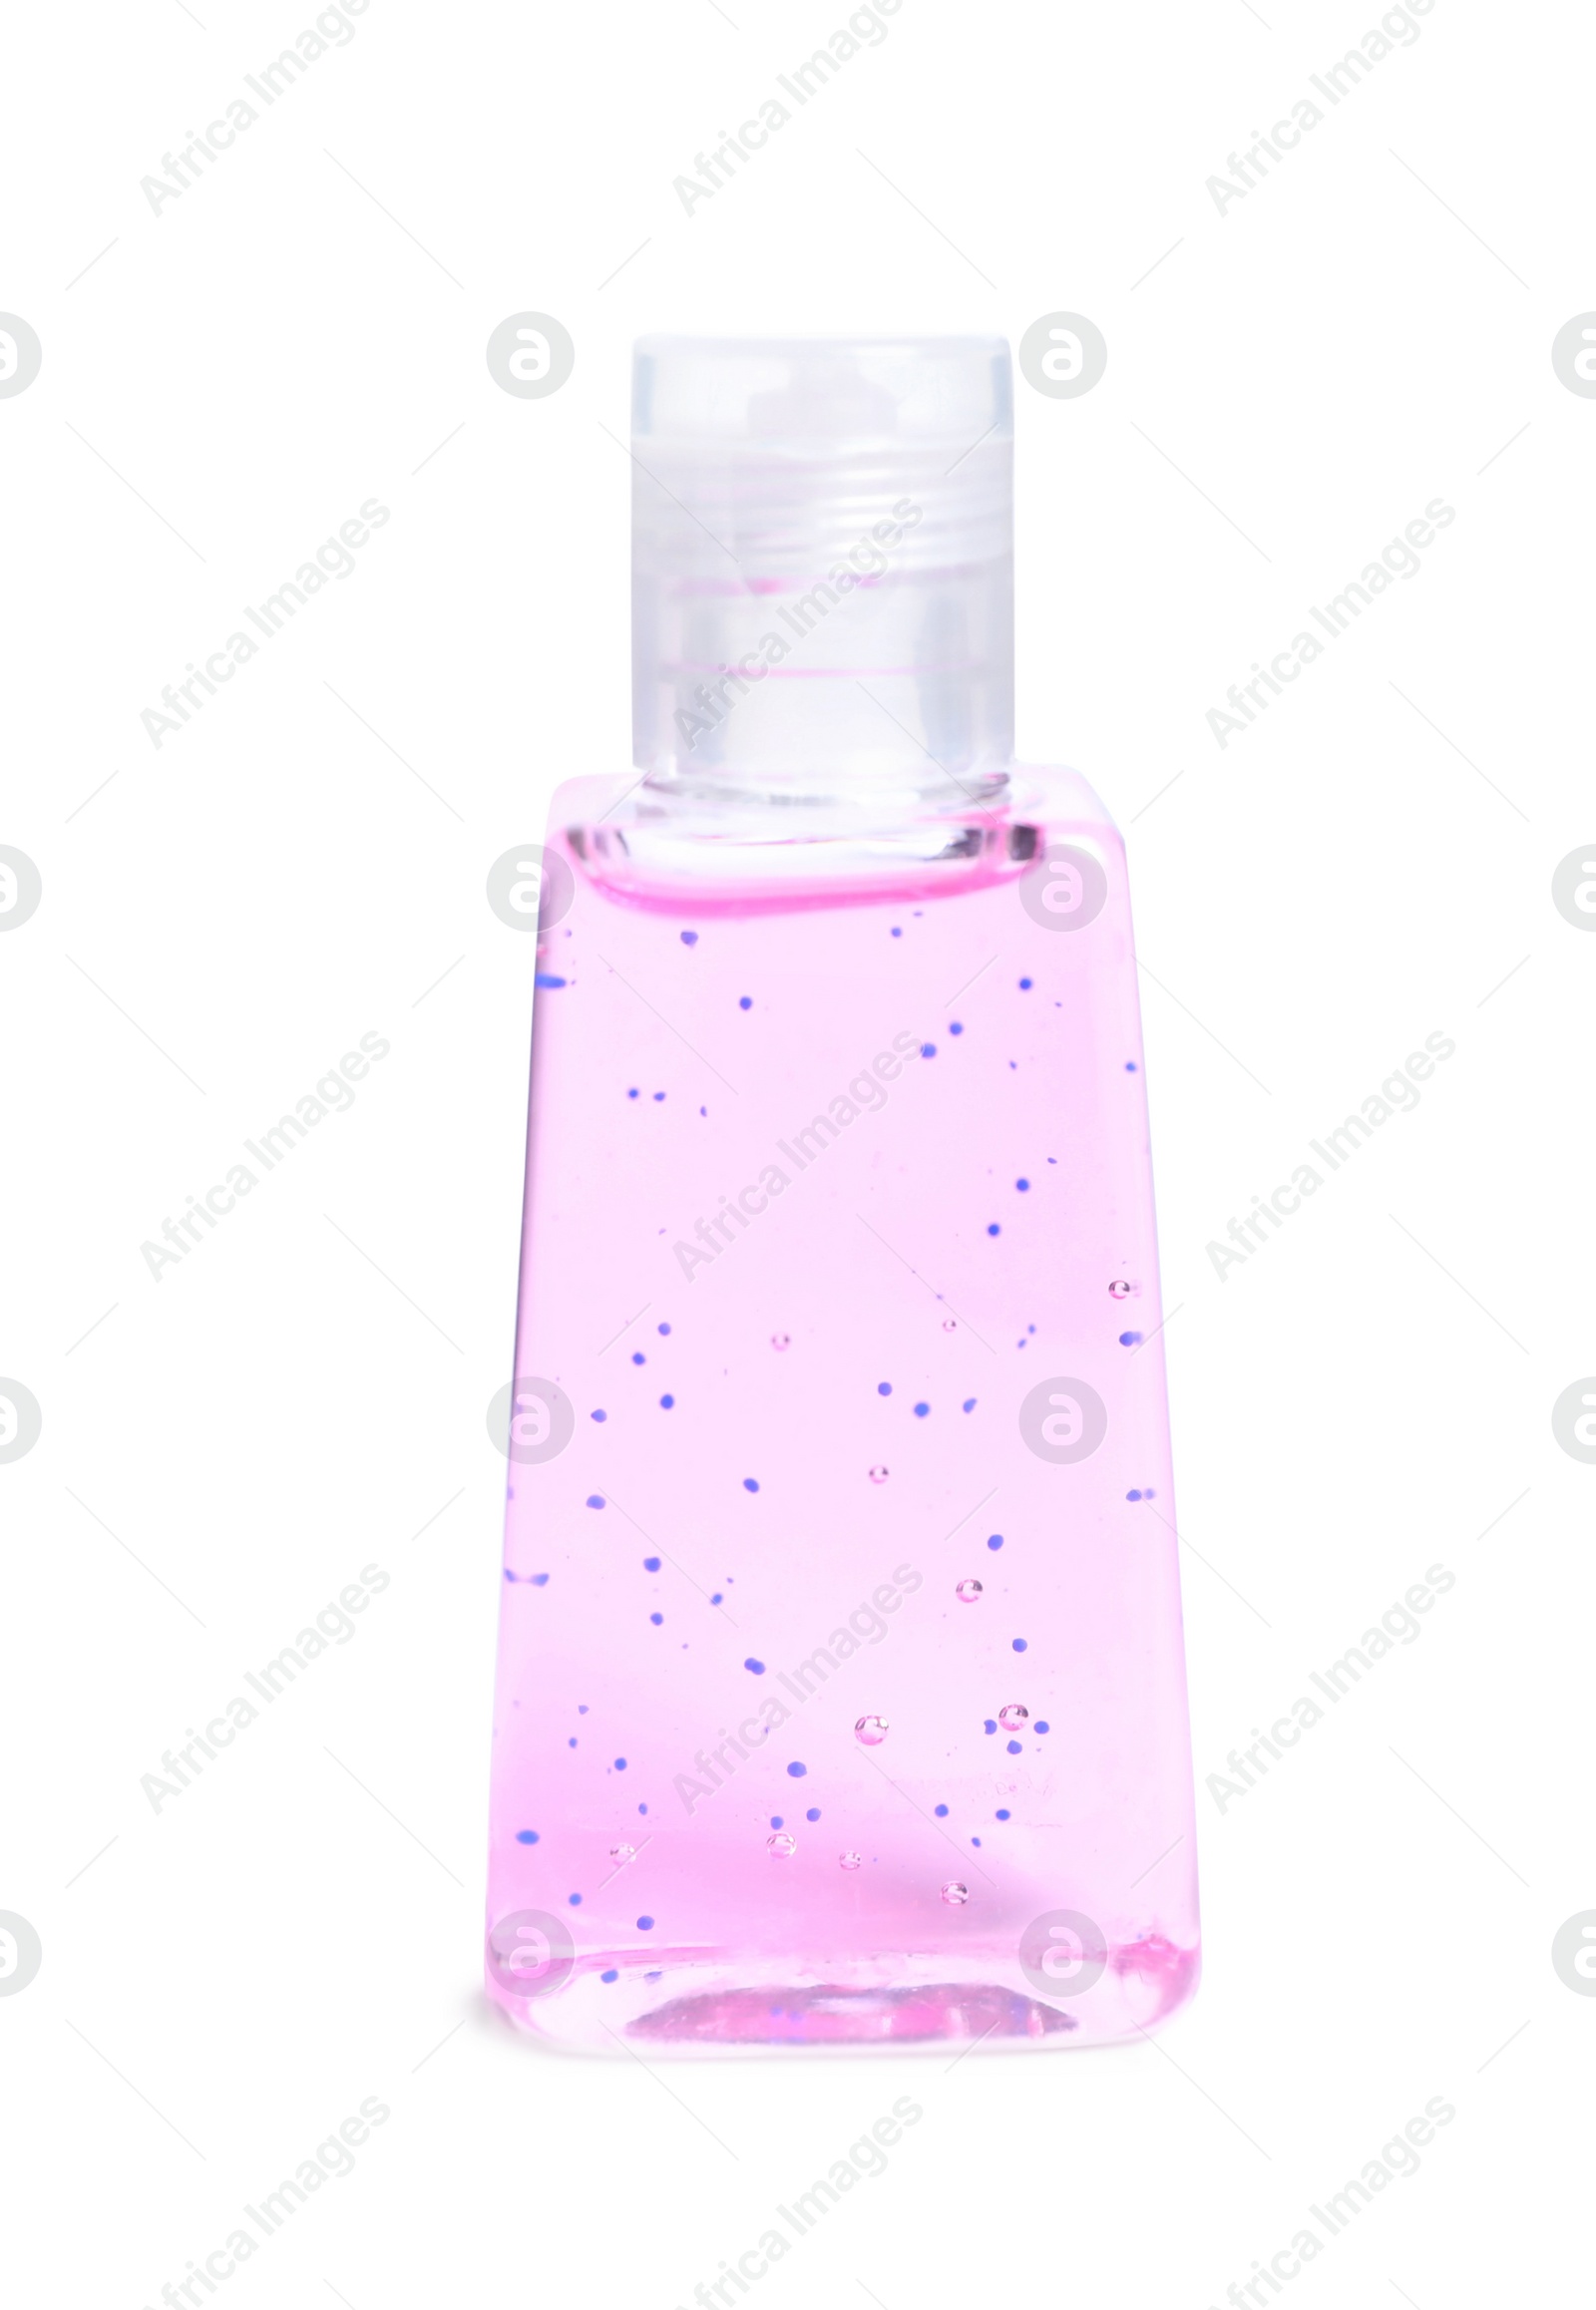 Photo of Bottle with antiseptic gel isolated on white